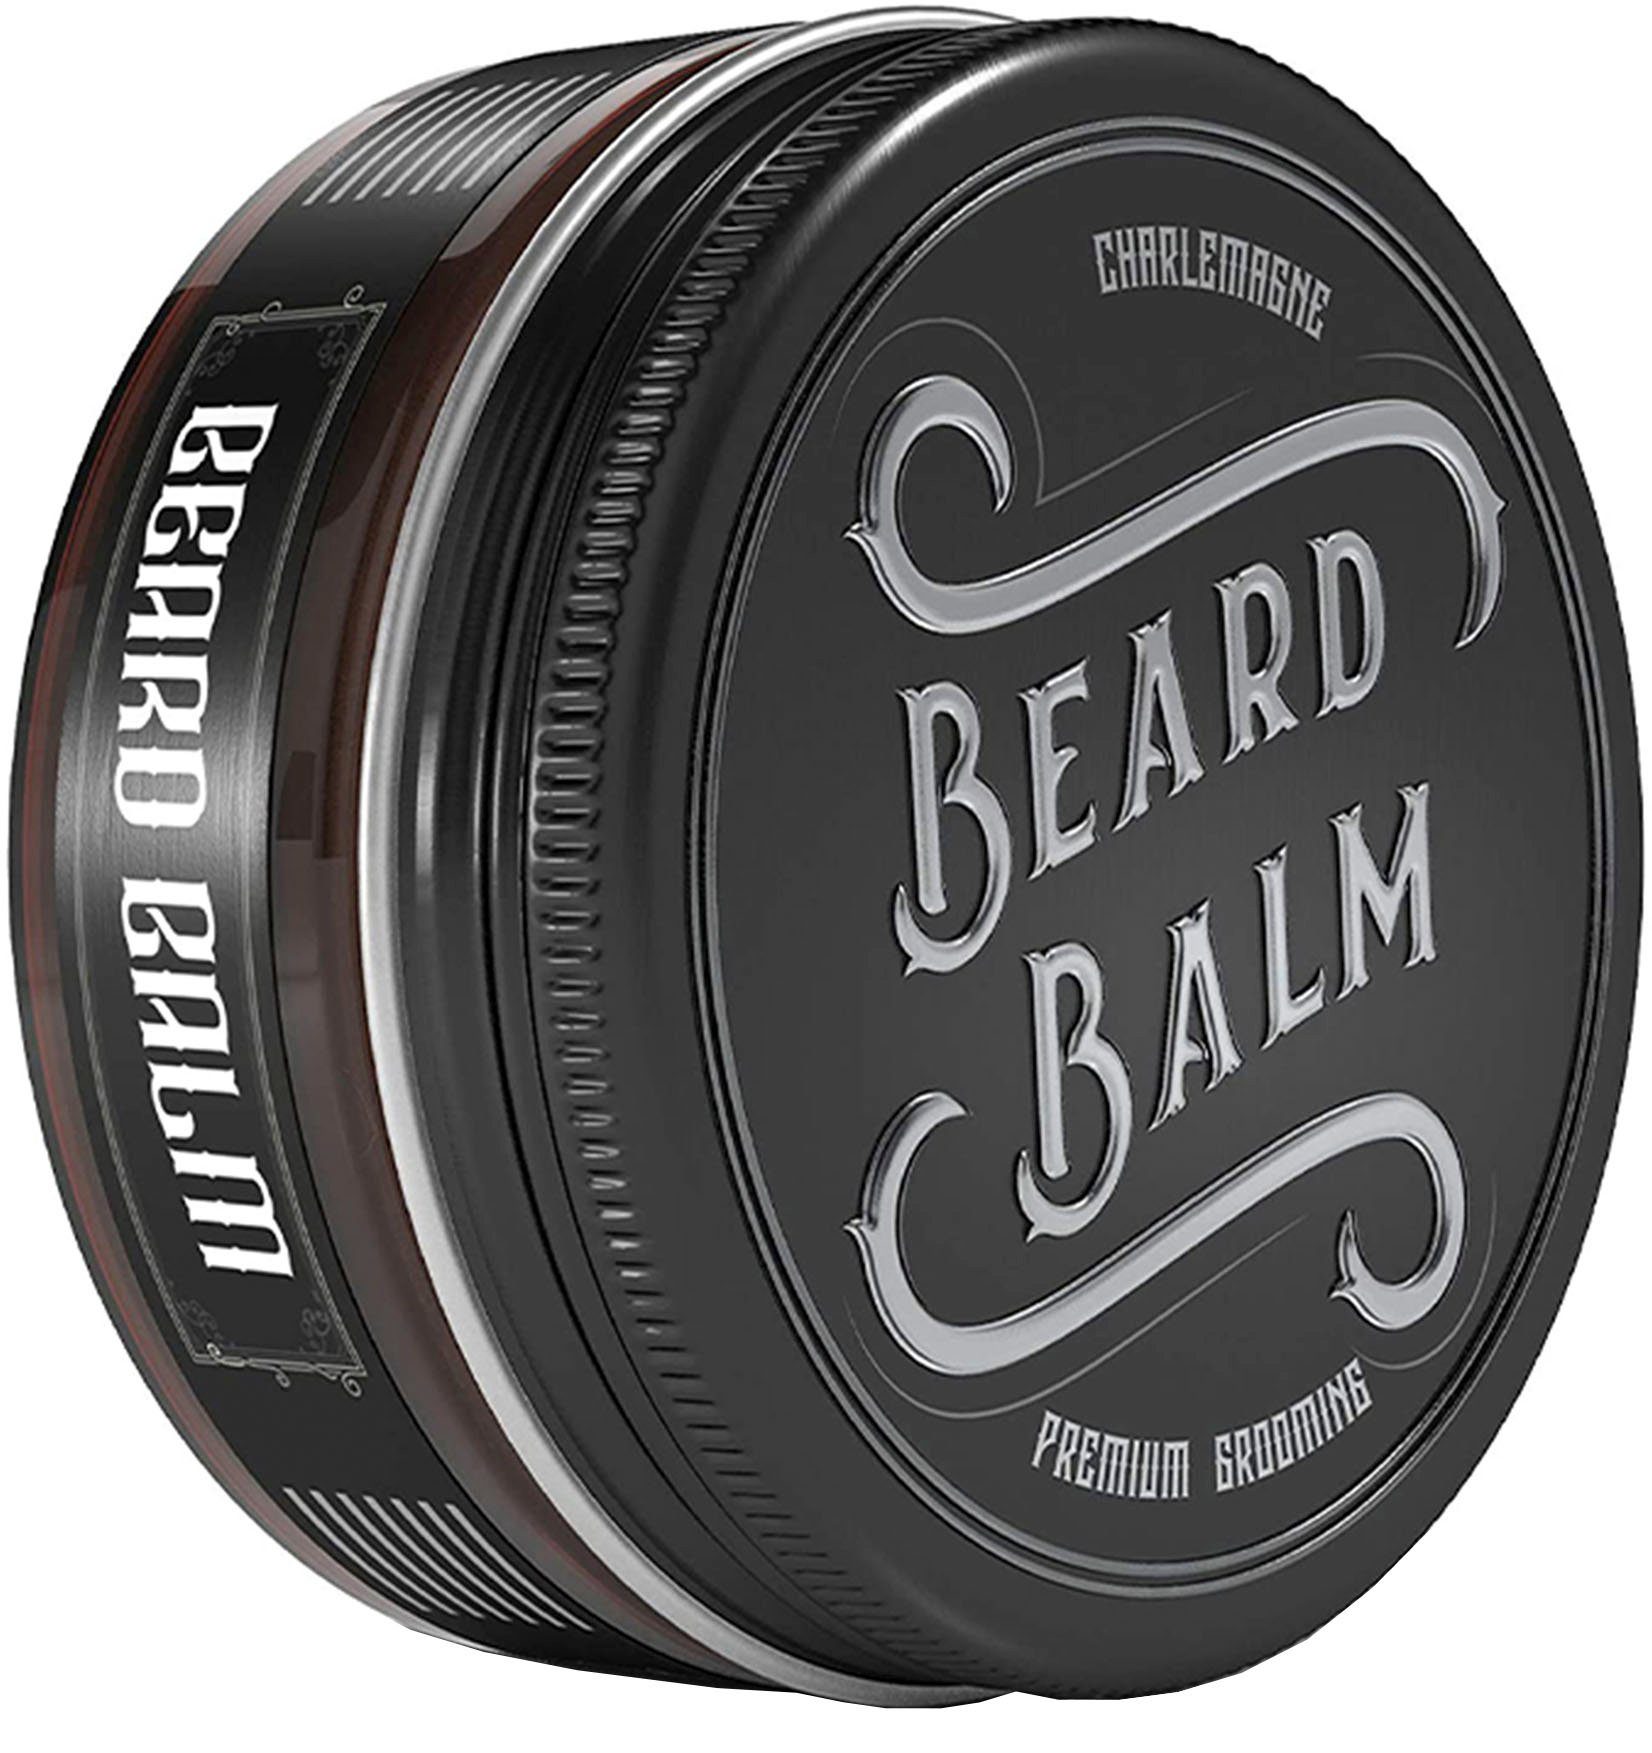 Bartbalsam Balm CHARLEMAGNE Beard